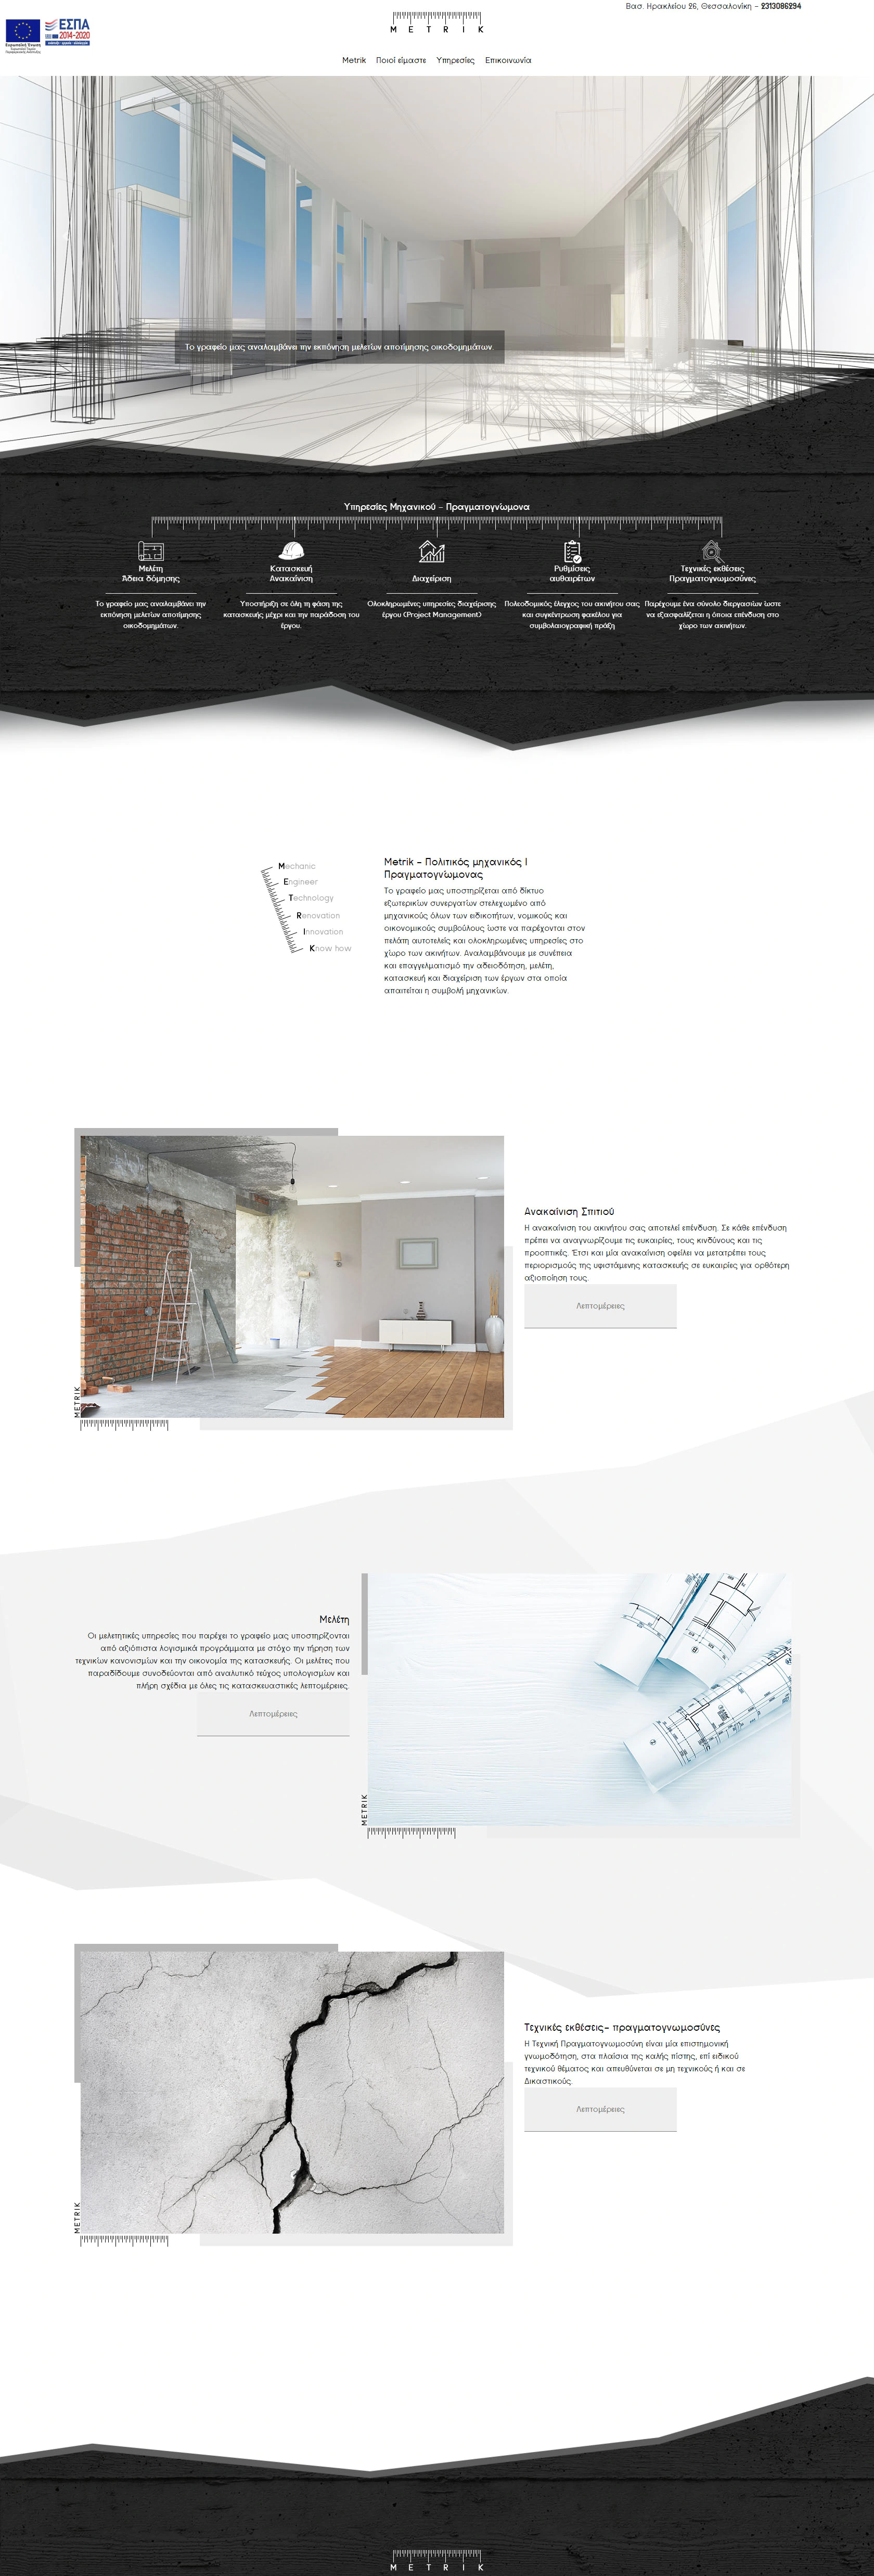 Hexabit web design - Αρχιτεκτονικό Γραφείο Metrik